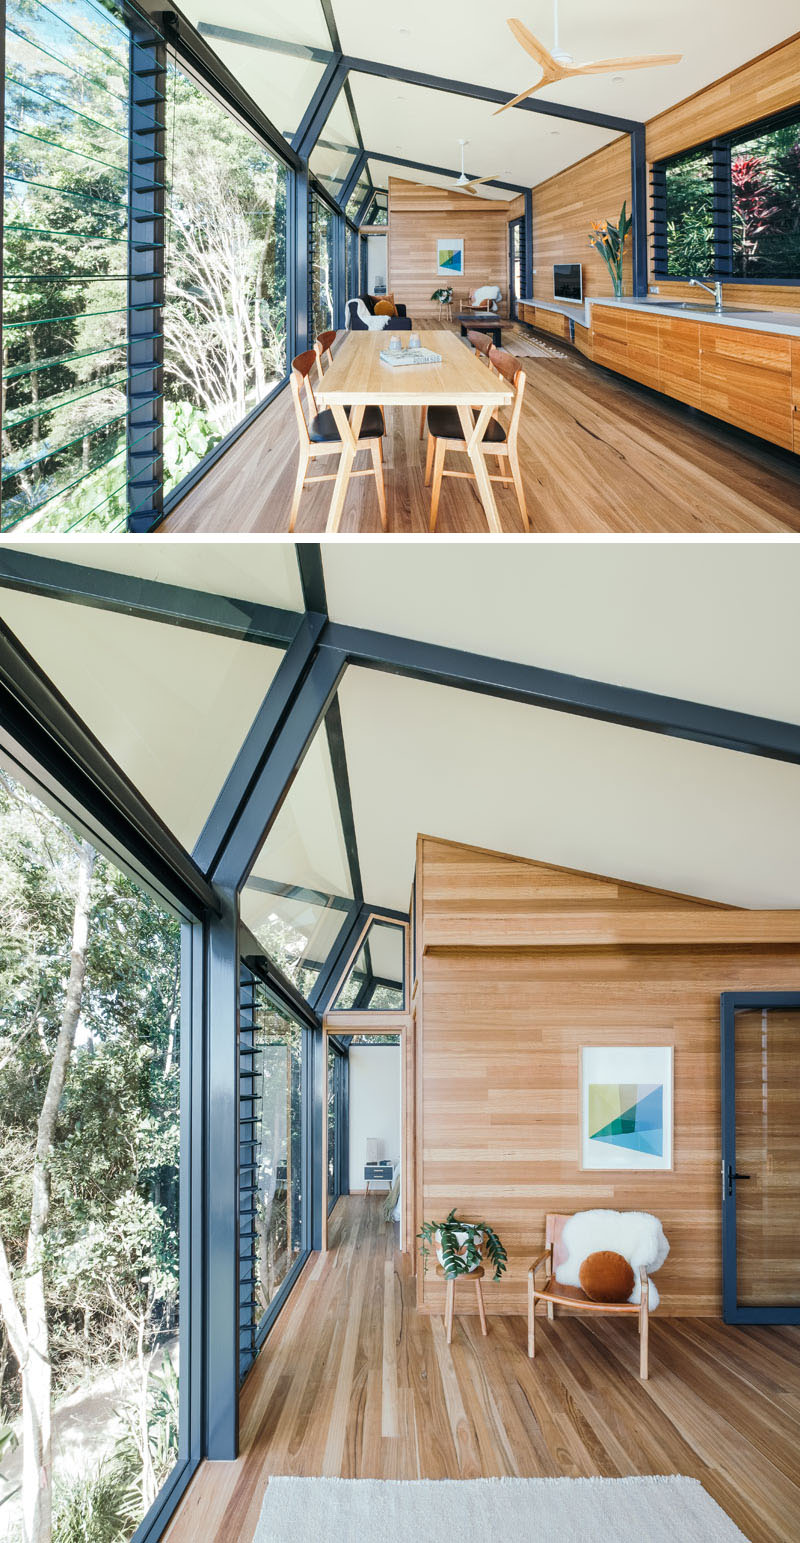 Small Modern Cabin Wood Interior Design 071018 1021 06